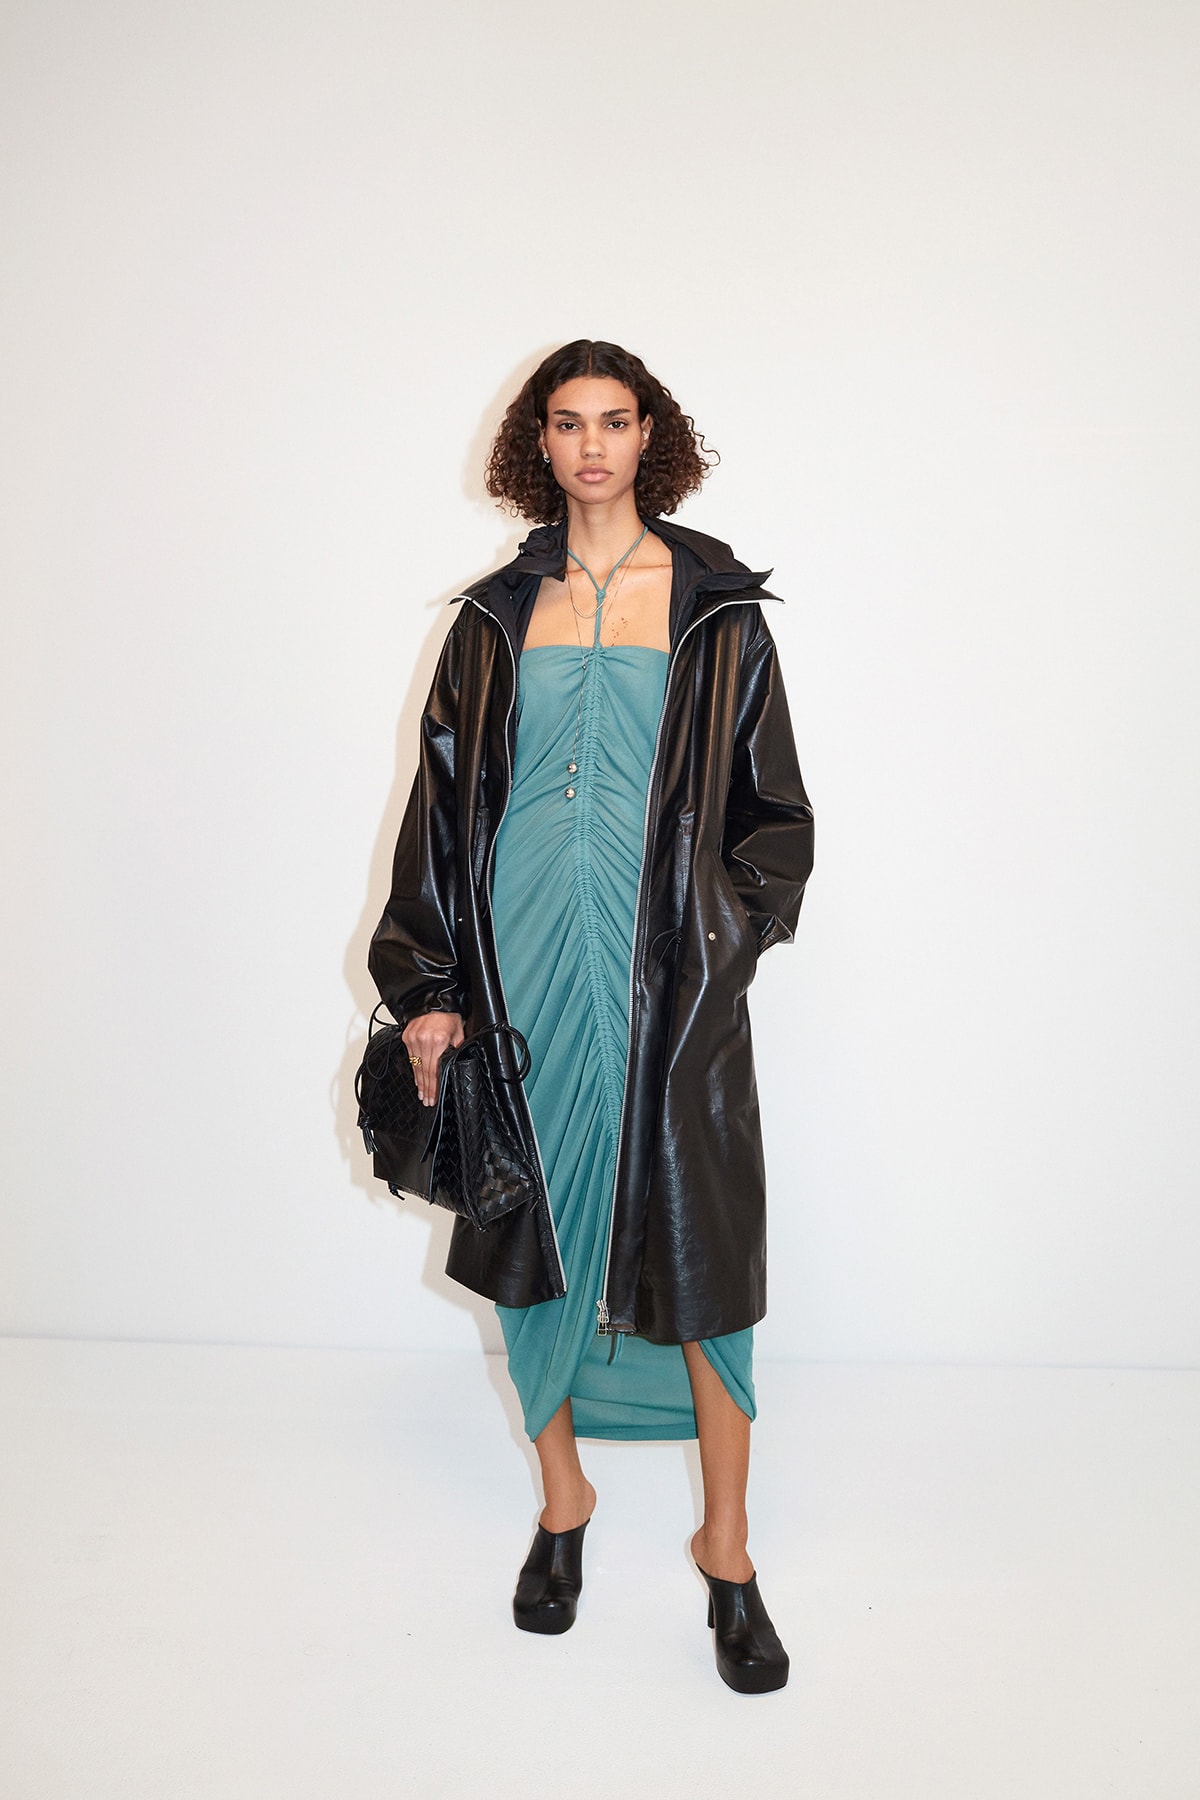 Bottega Veneta Pre-Fall 2020 Collection Lookbook Ruched Dress Blue Coat Black